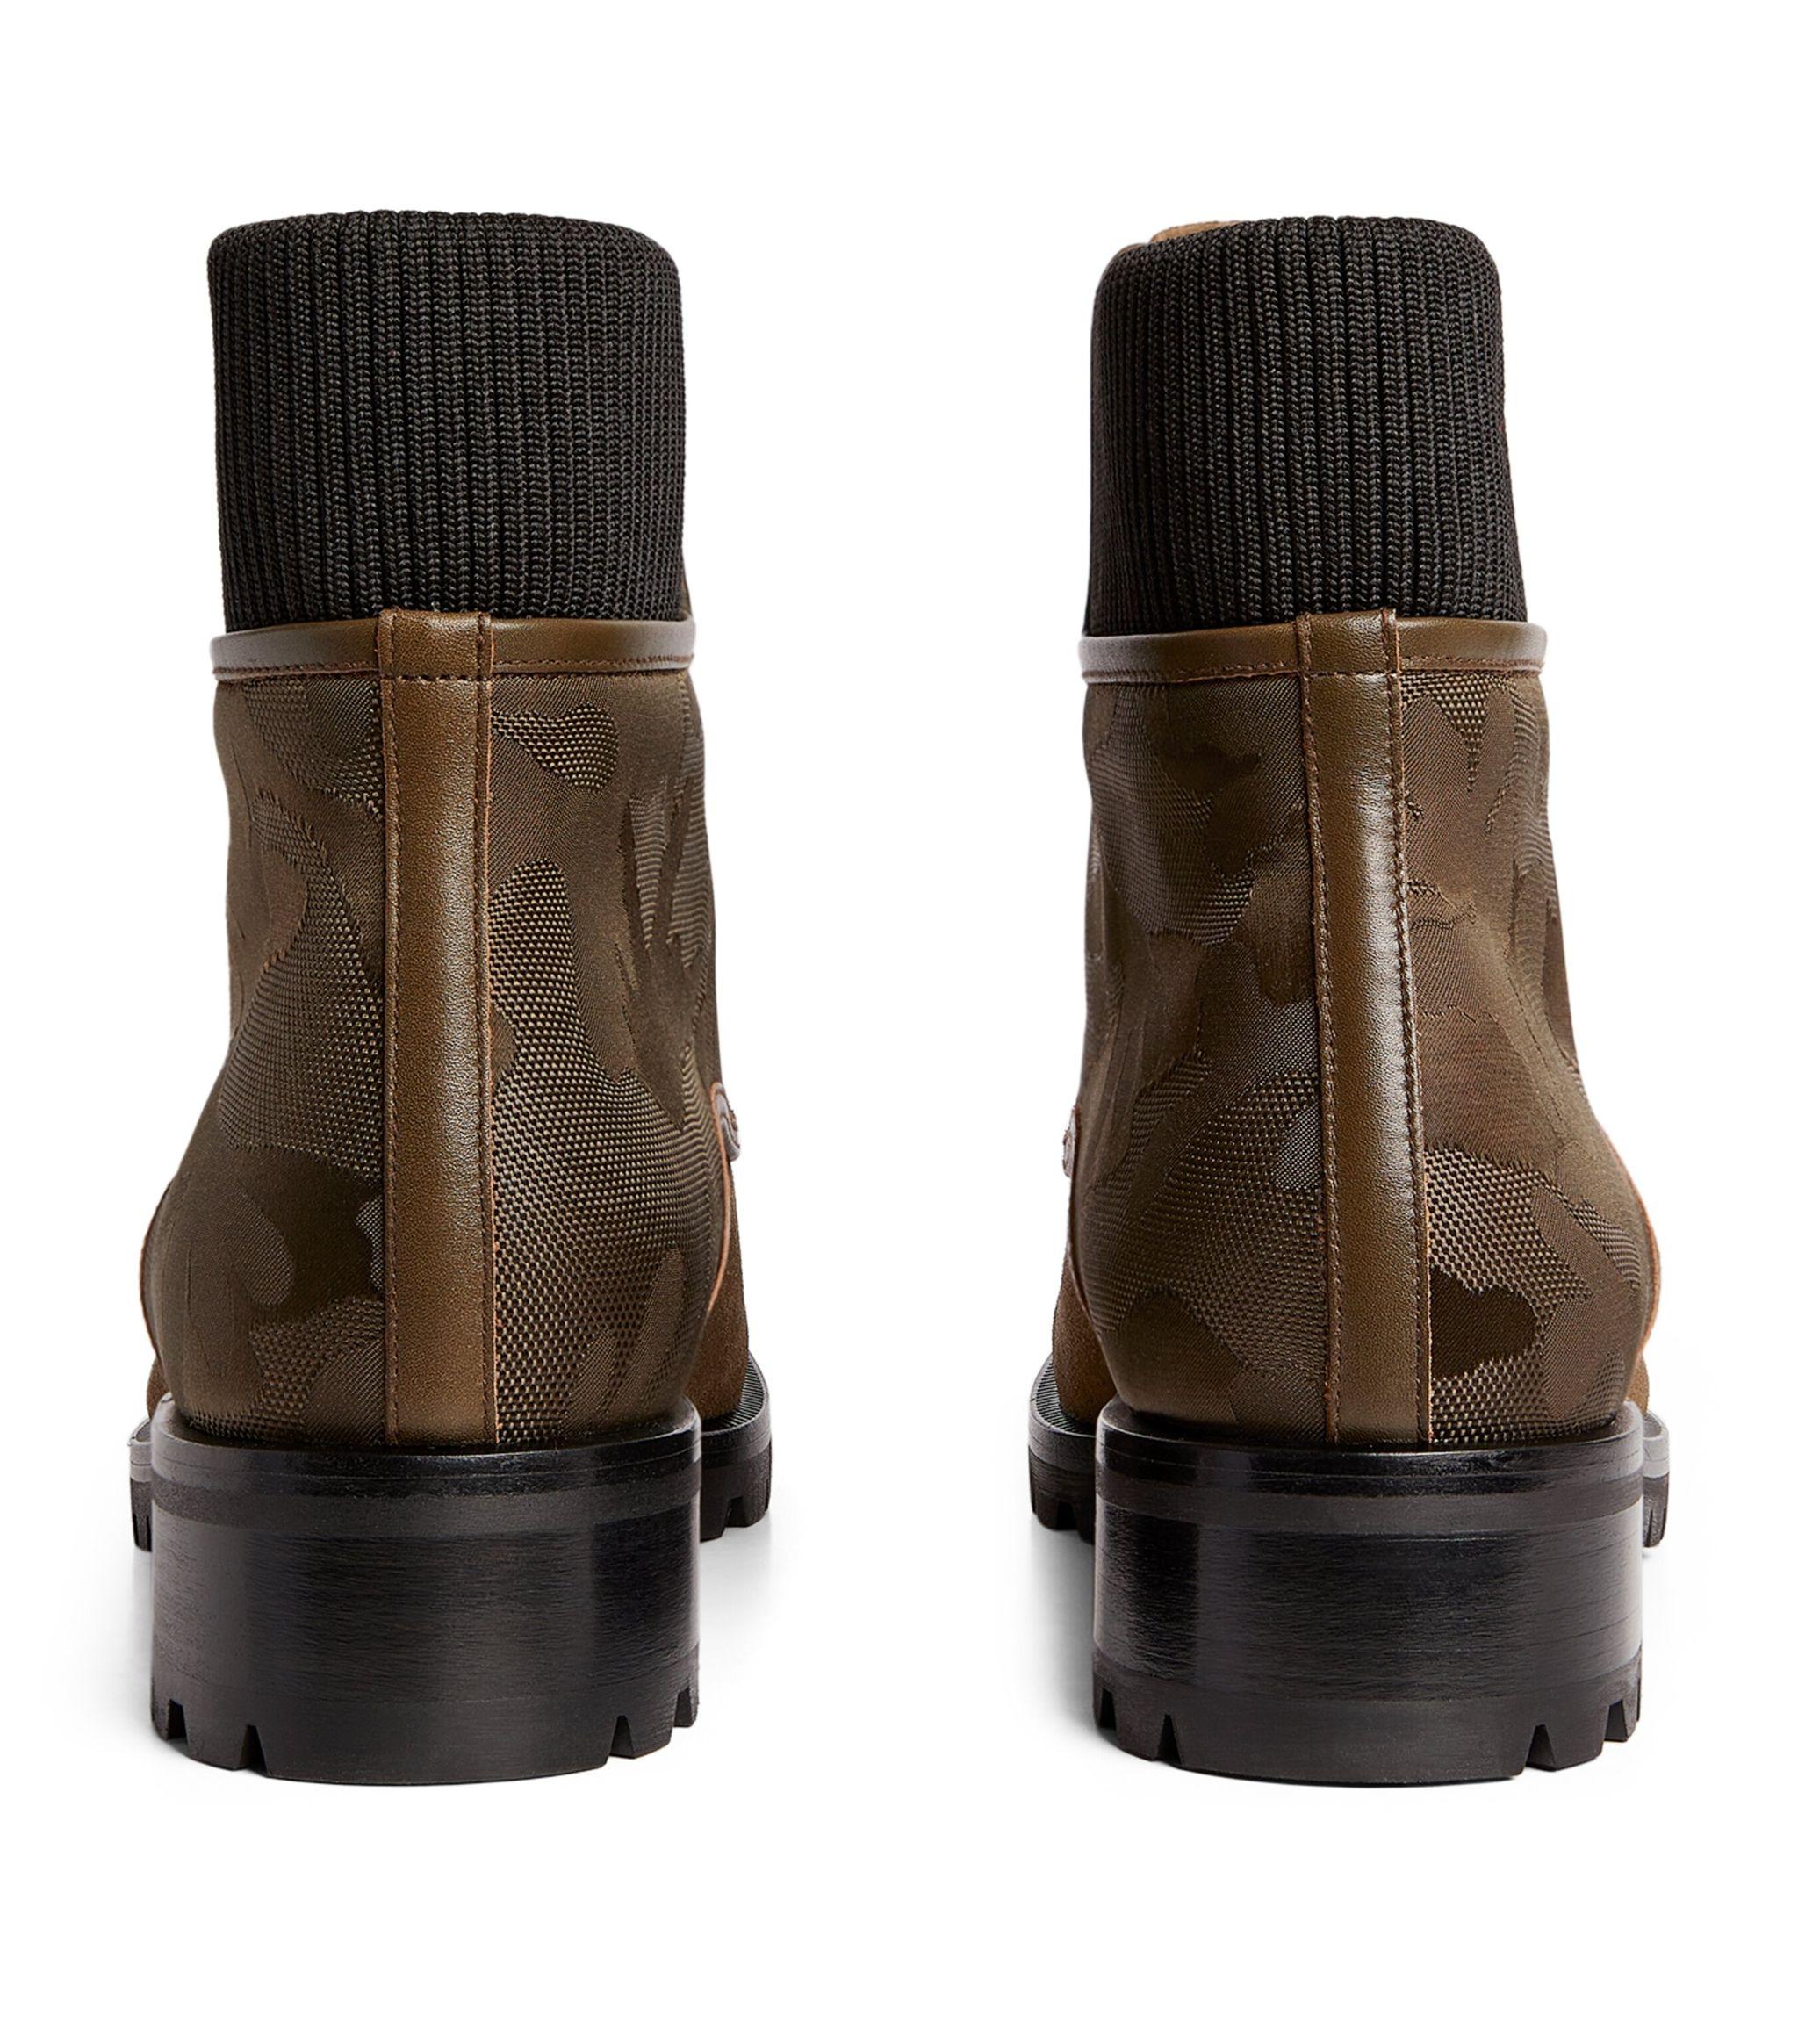 Christian Louboutin Men's Trapman Leather Boots